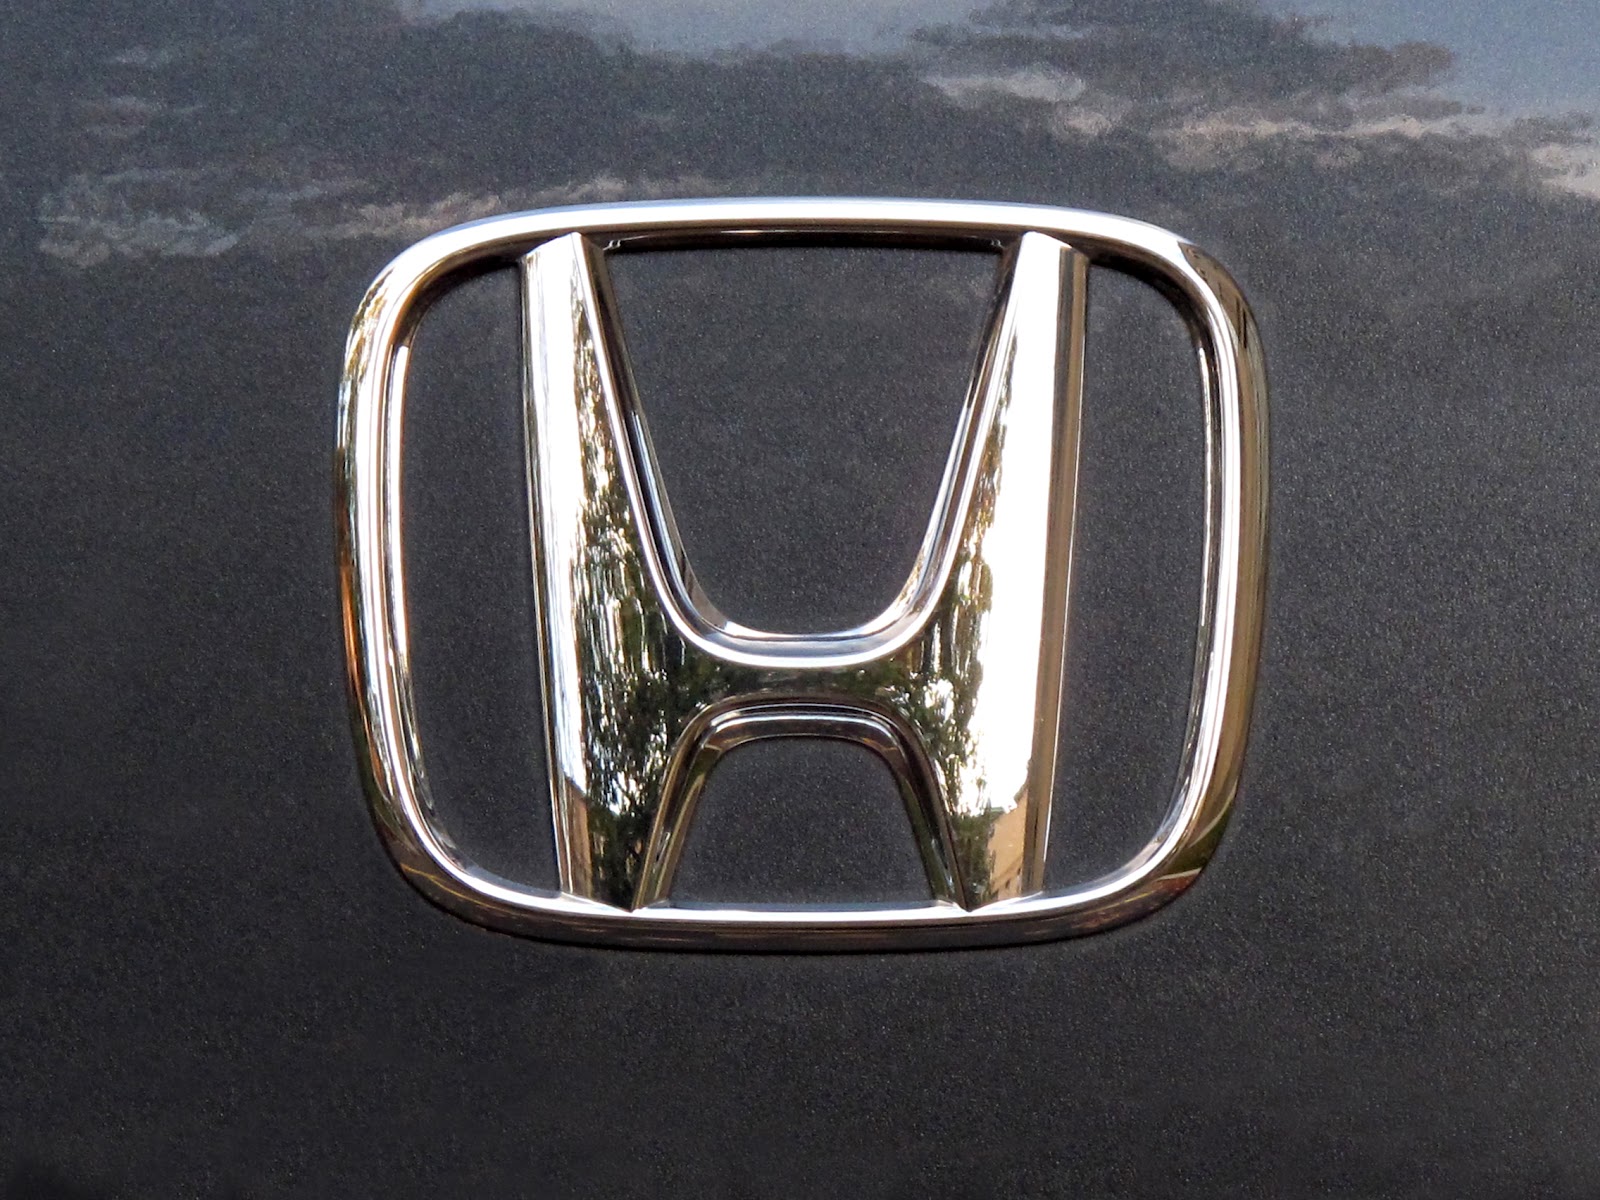 Free Honda Logo Wallpapers Download 